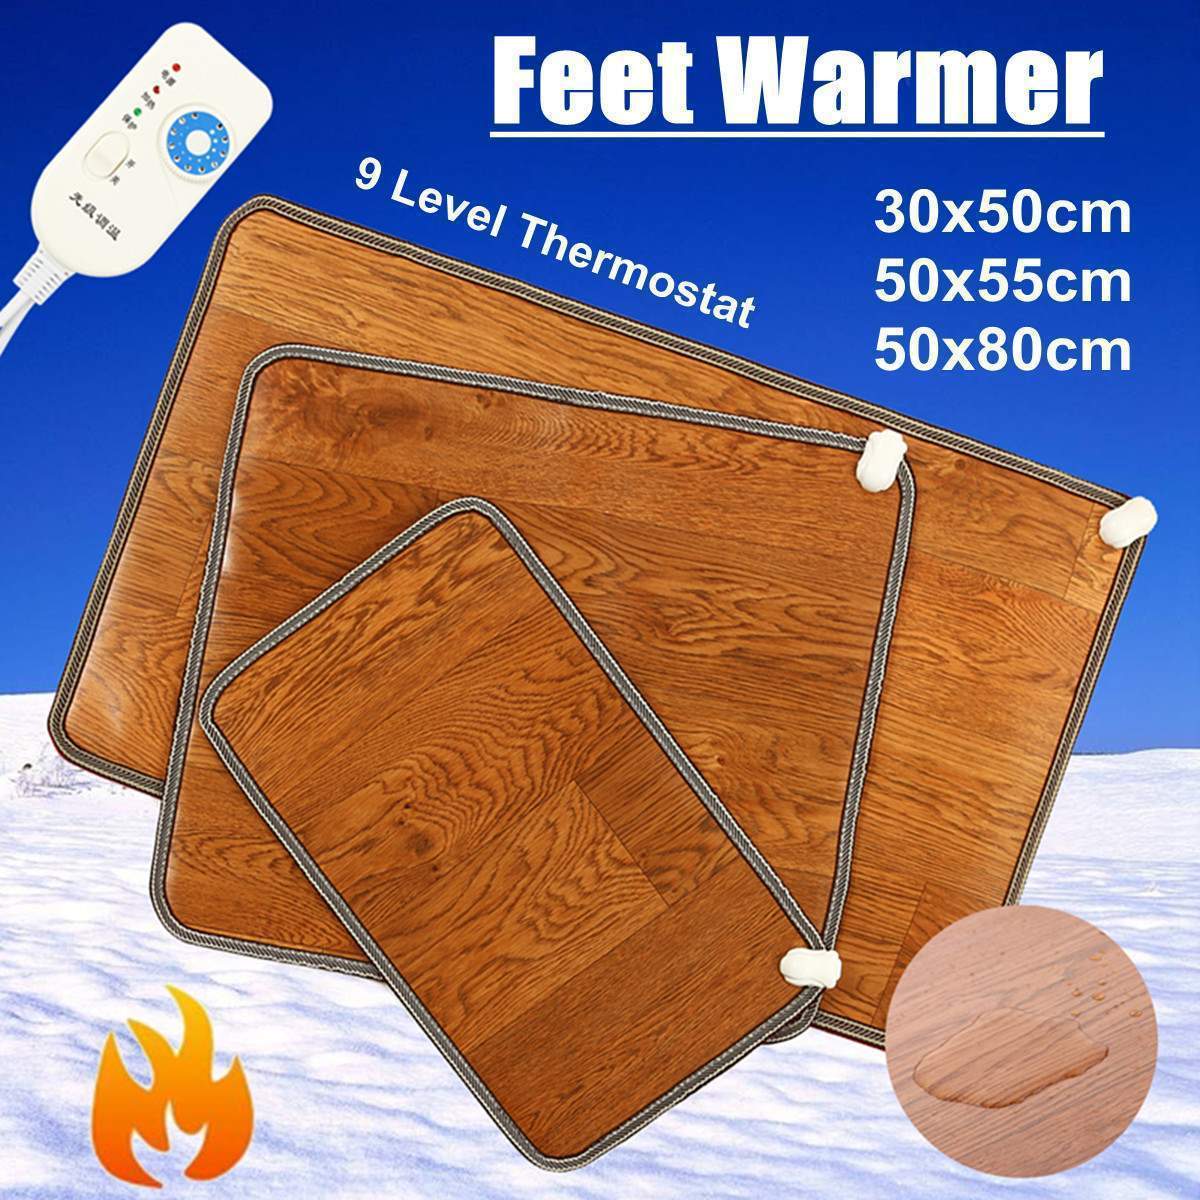 Feet Warmers Electric Foot Heater Pad